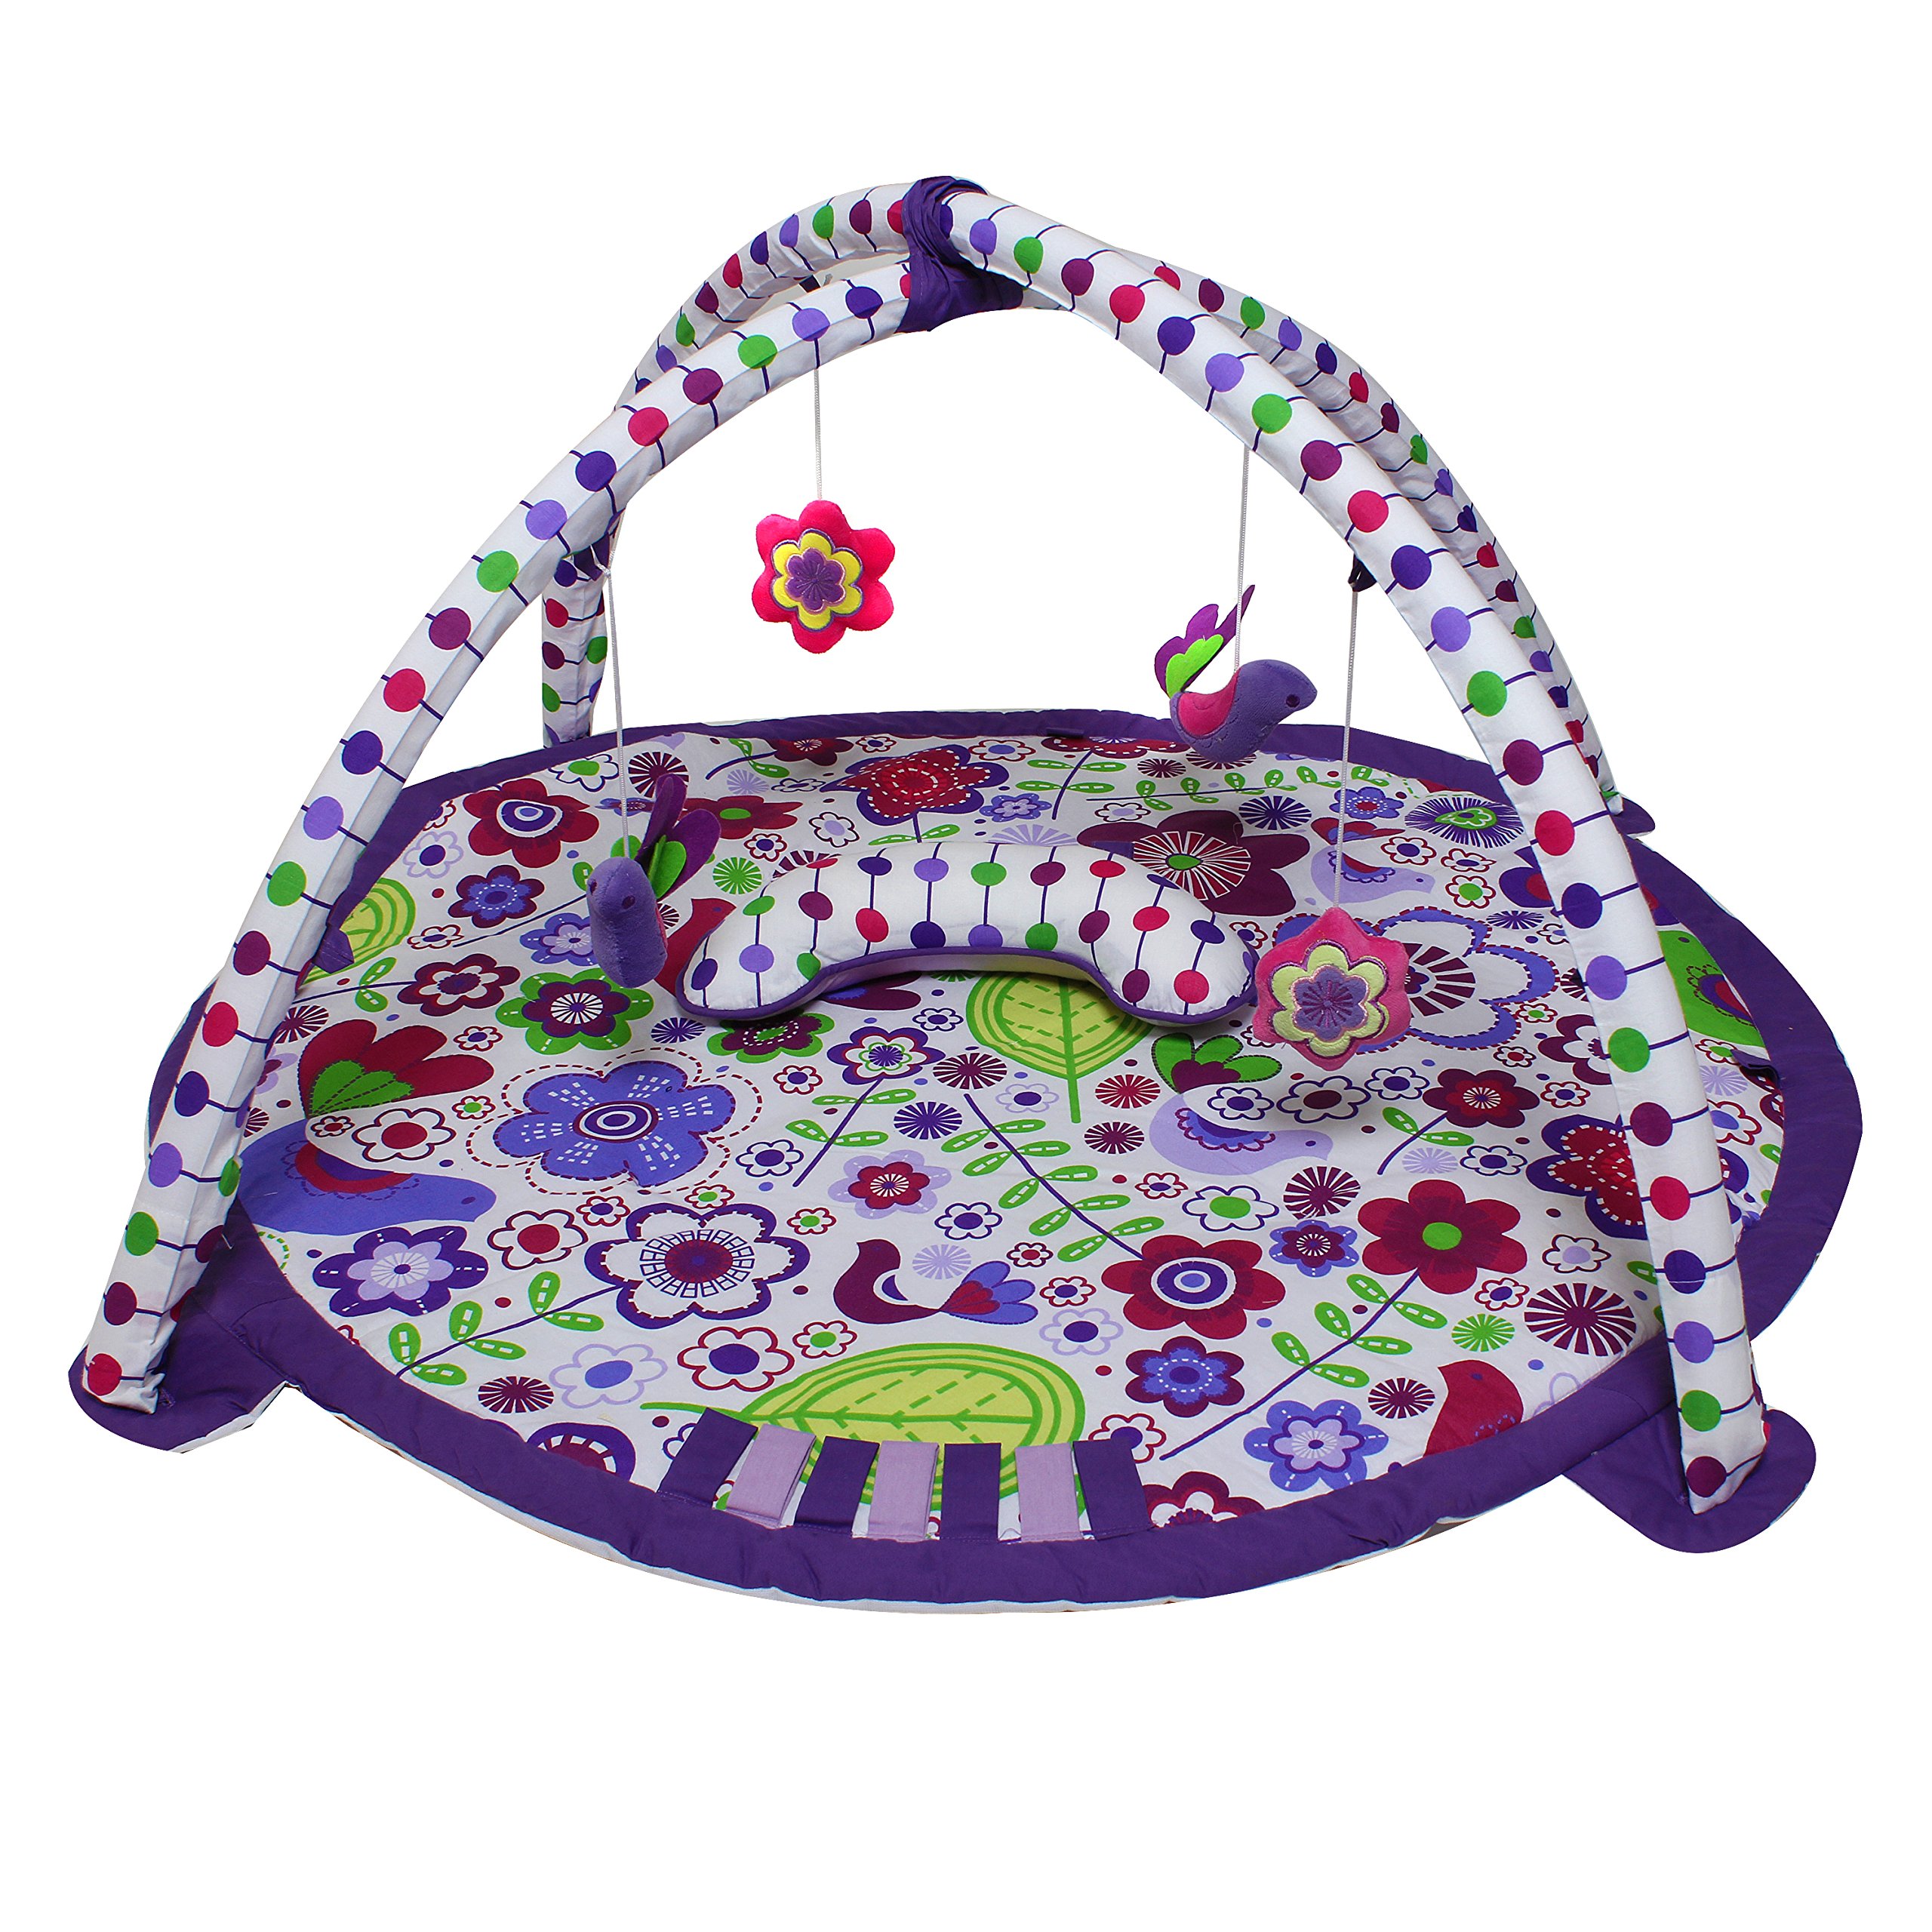 Bacati - Baby Activity Gyms & Playmats (Botanical Purple/Multi)